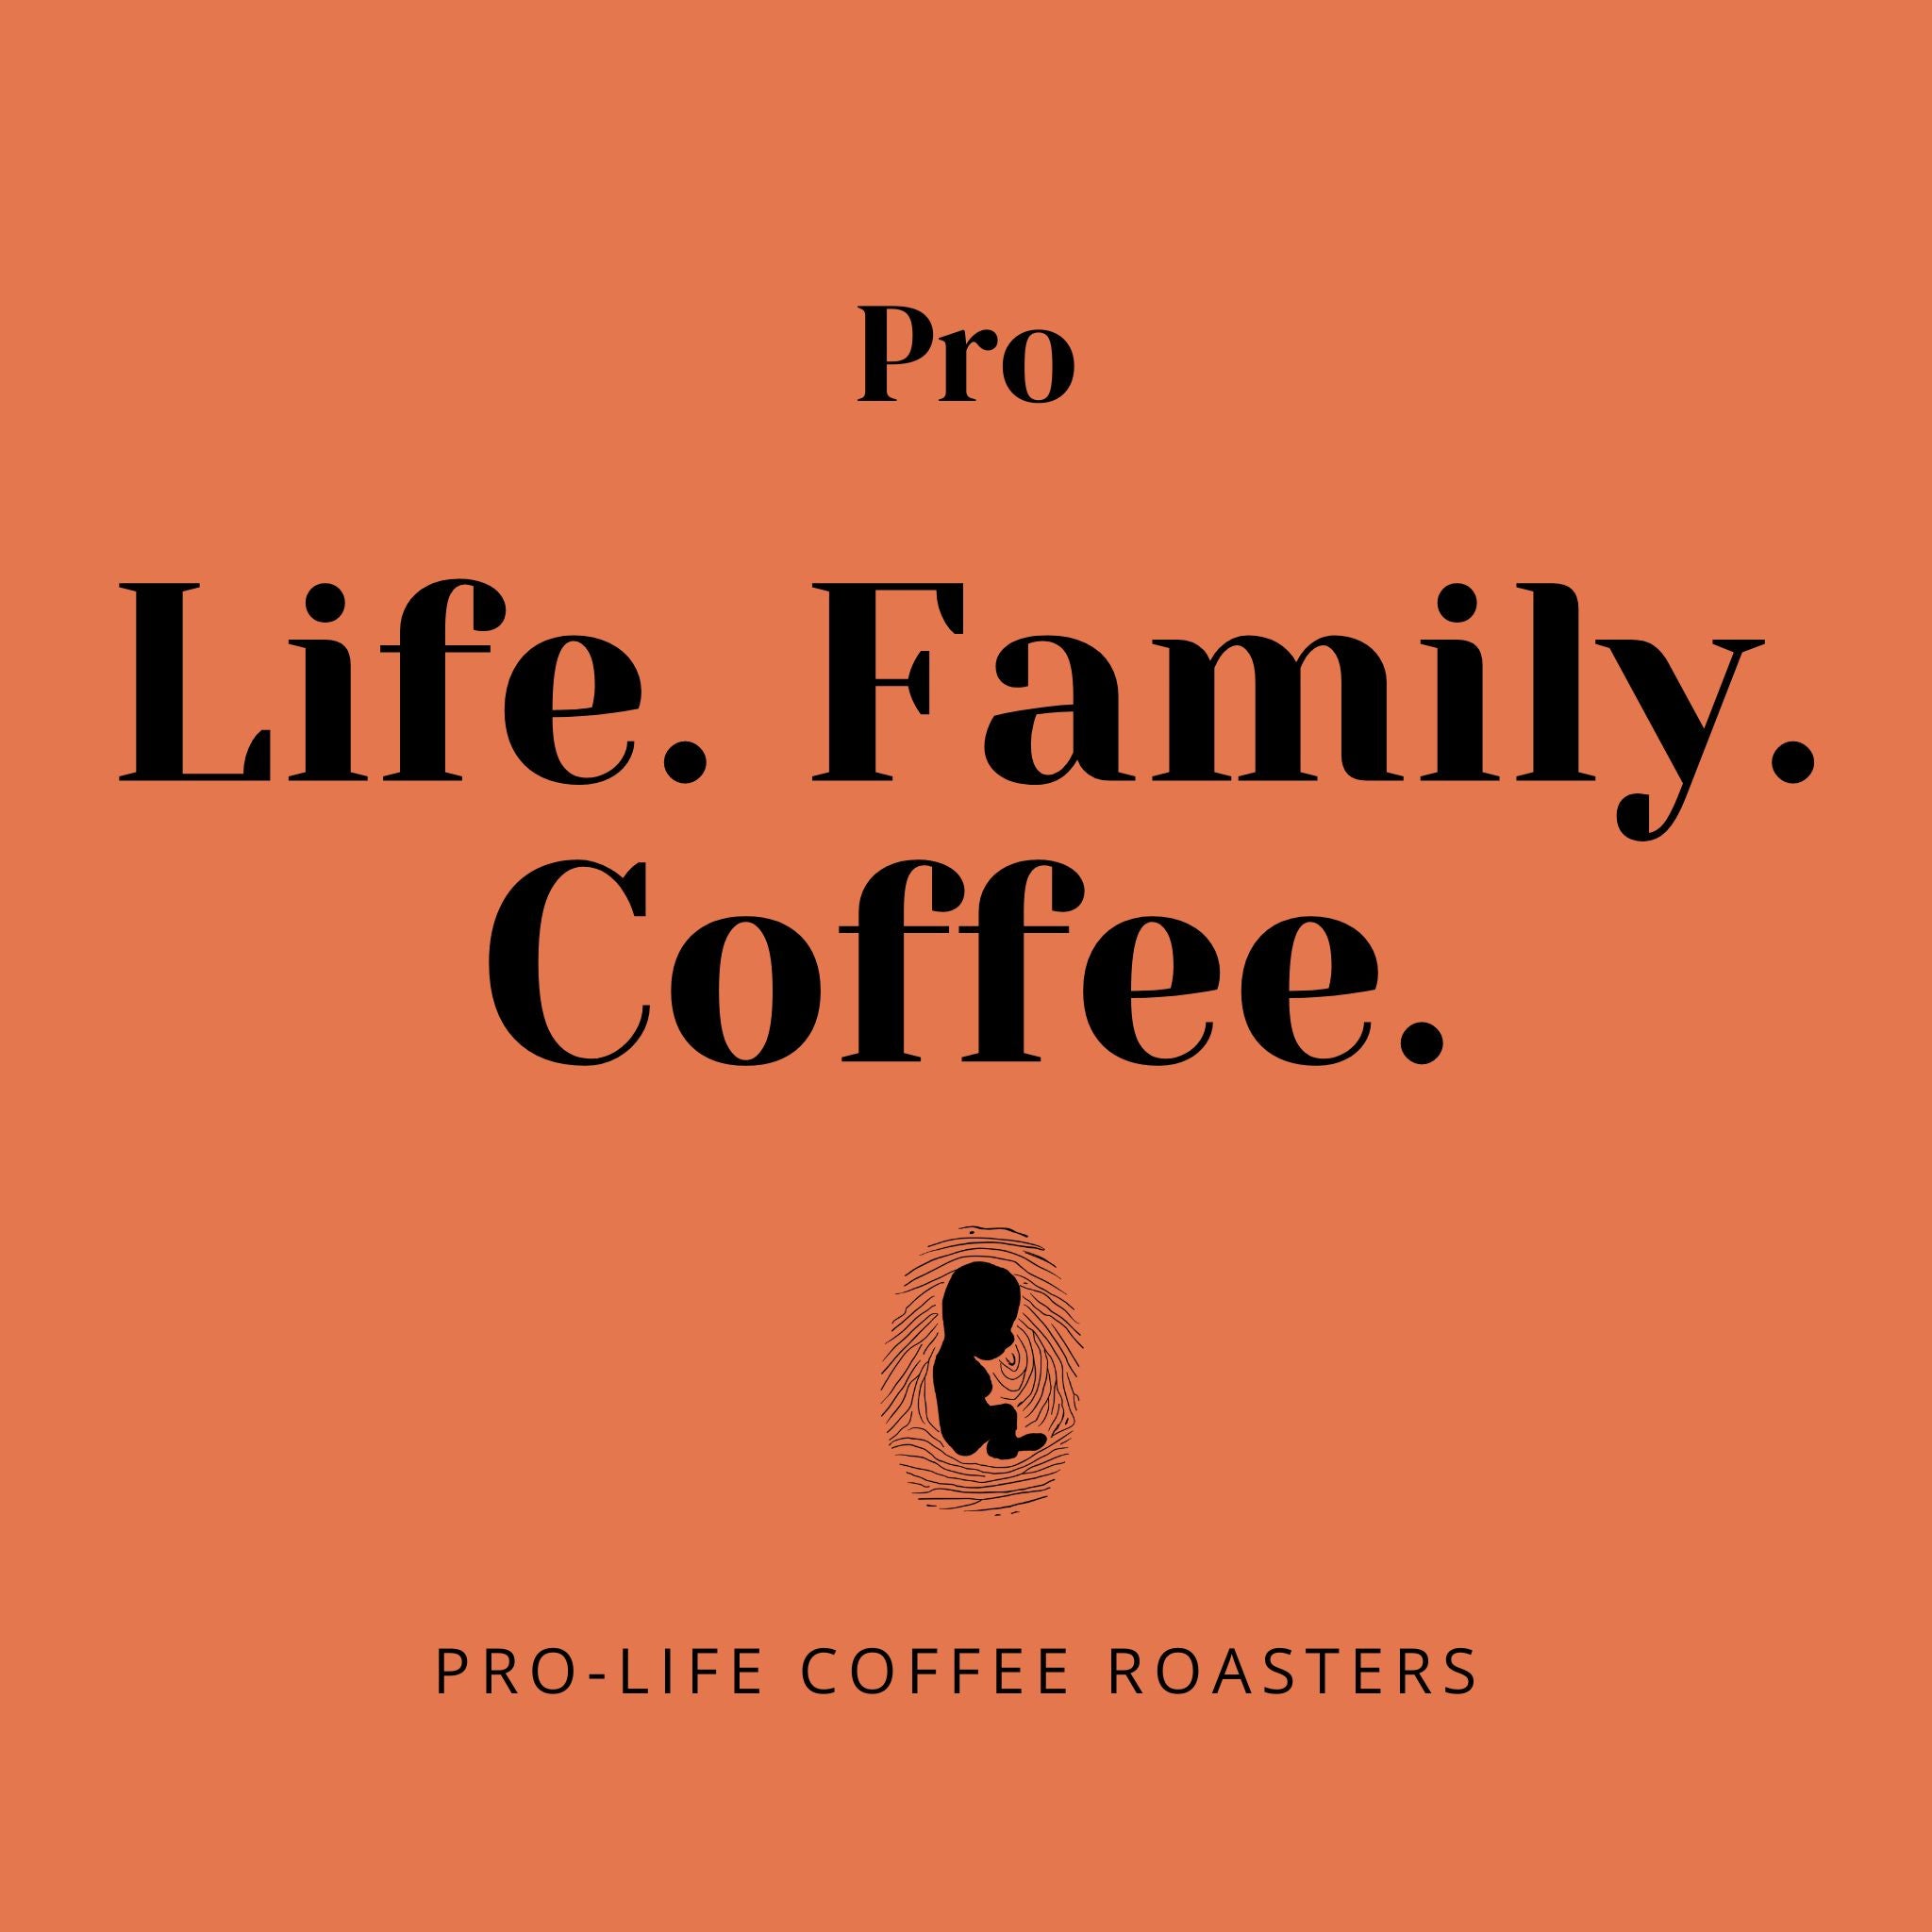 Pro Life.Family.Coffee.